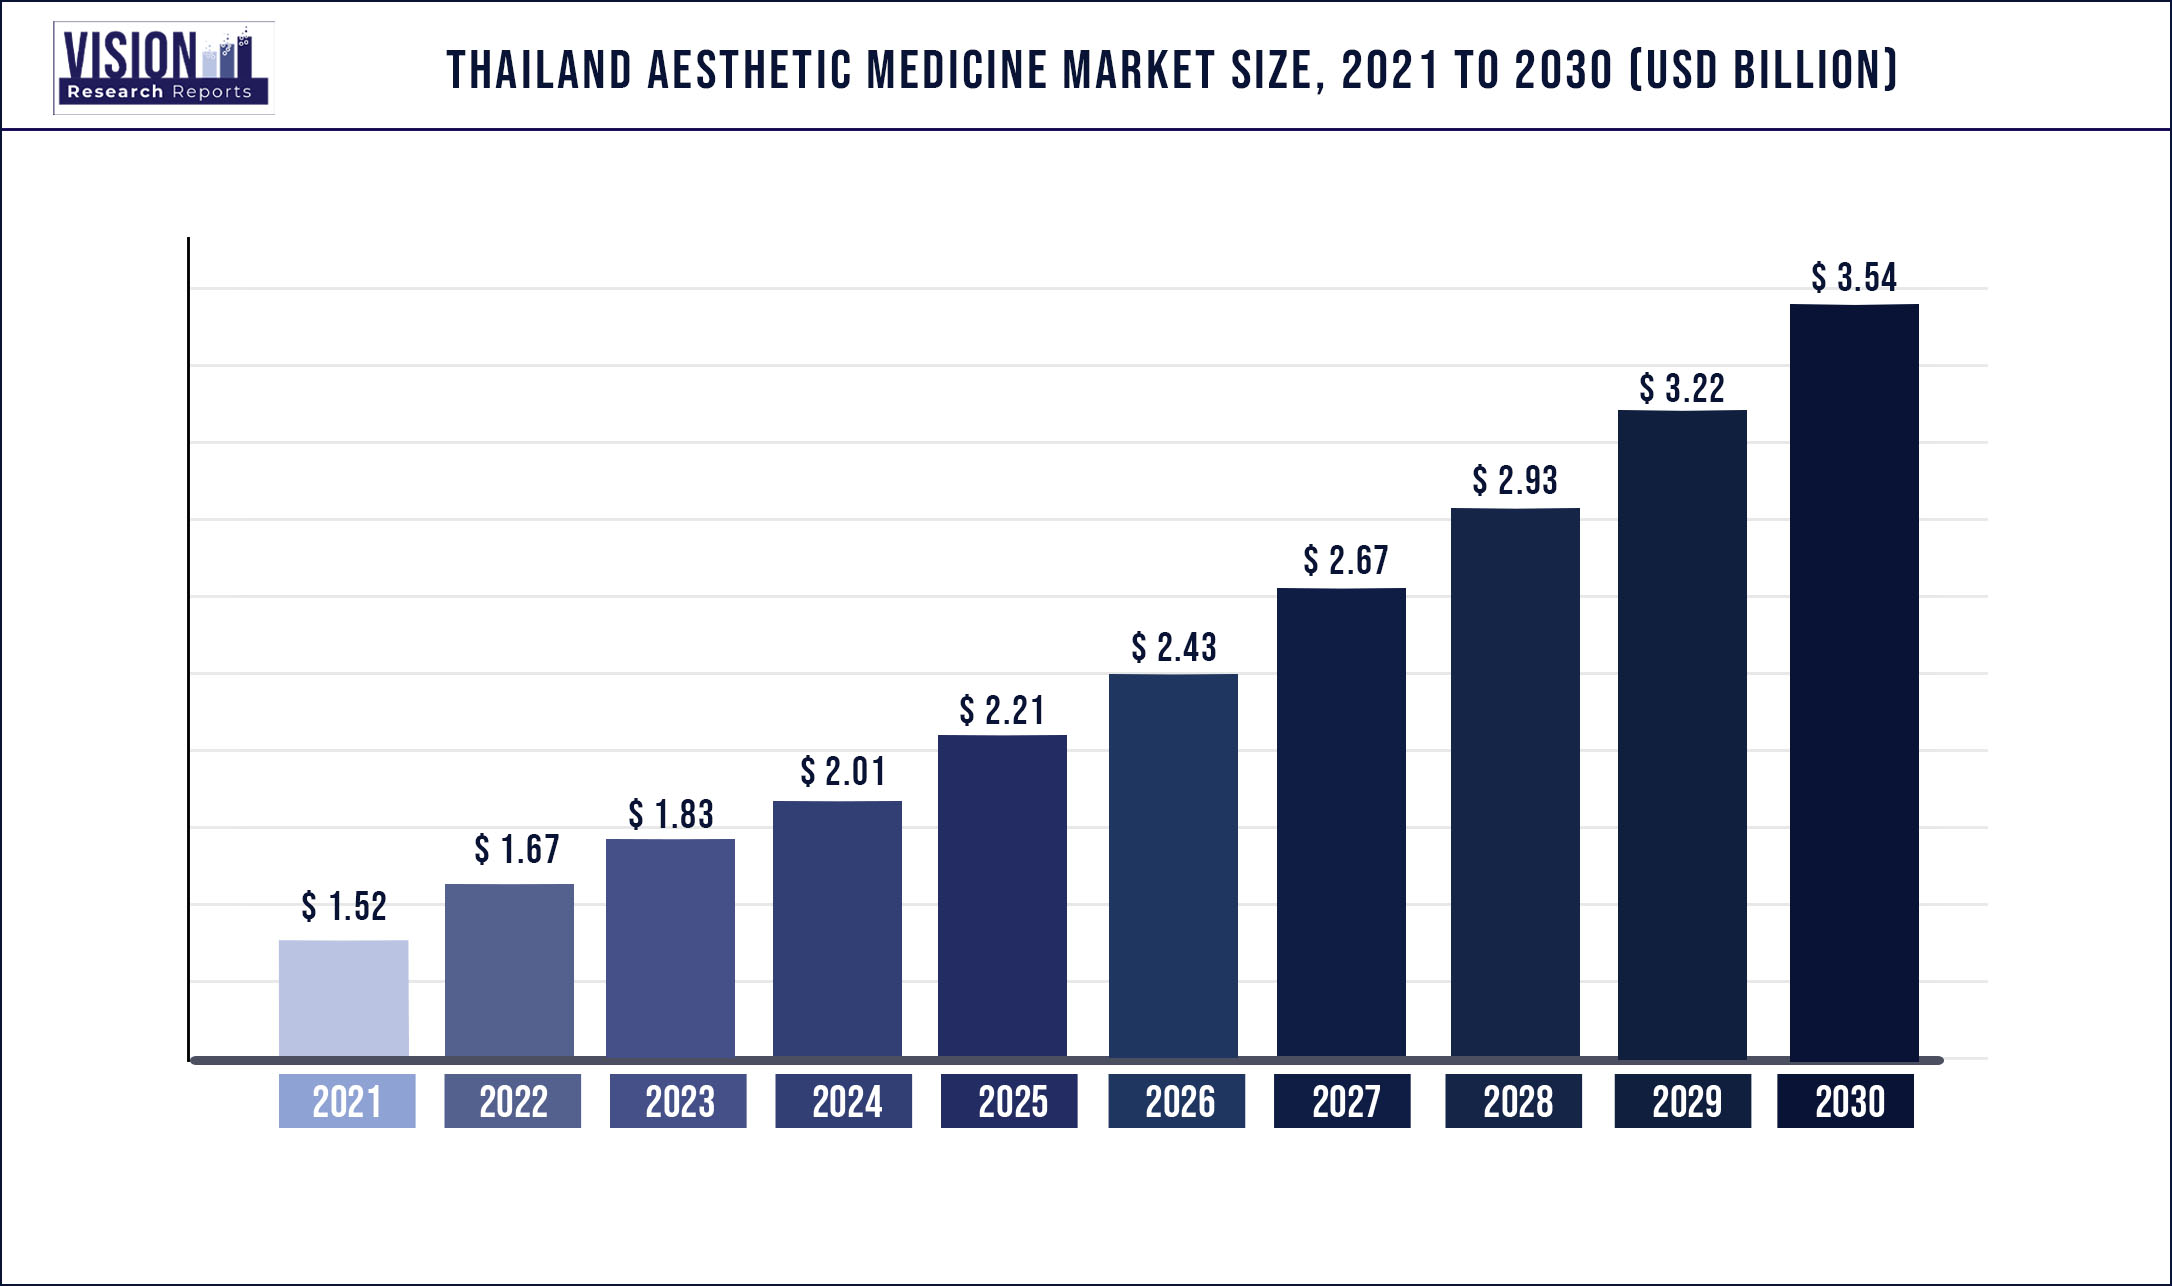 Thailand Aesthetic Medicine Market Size 2021 to 2030